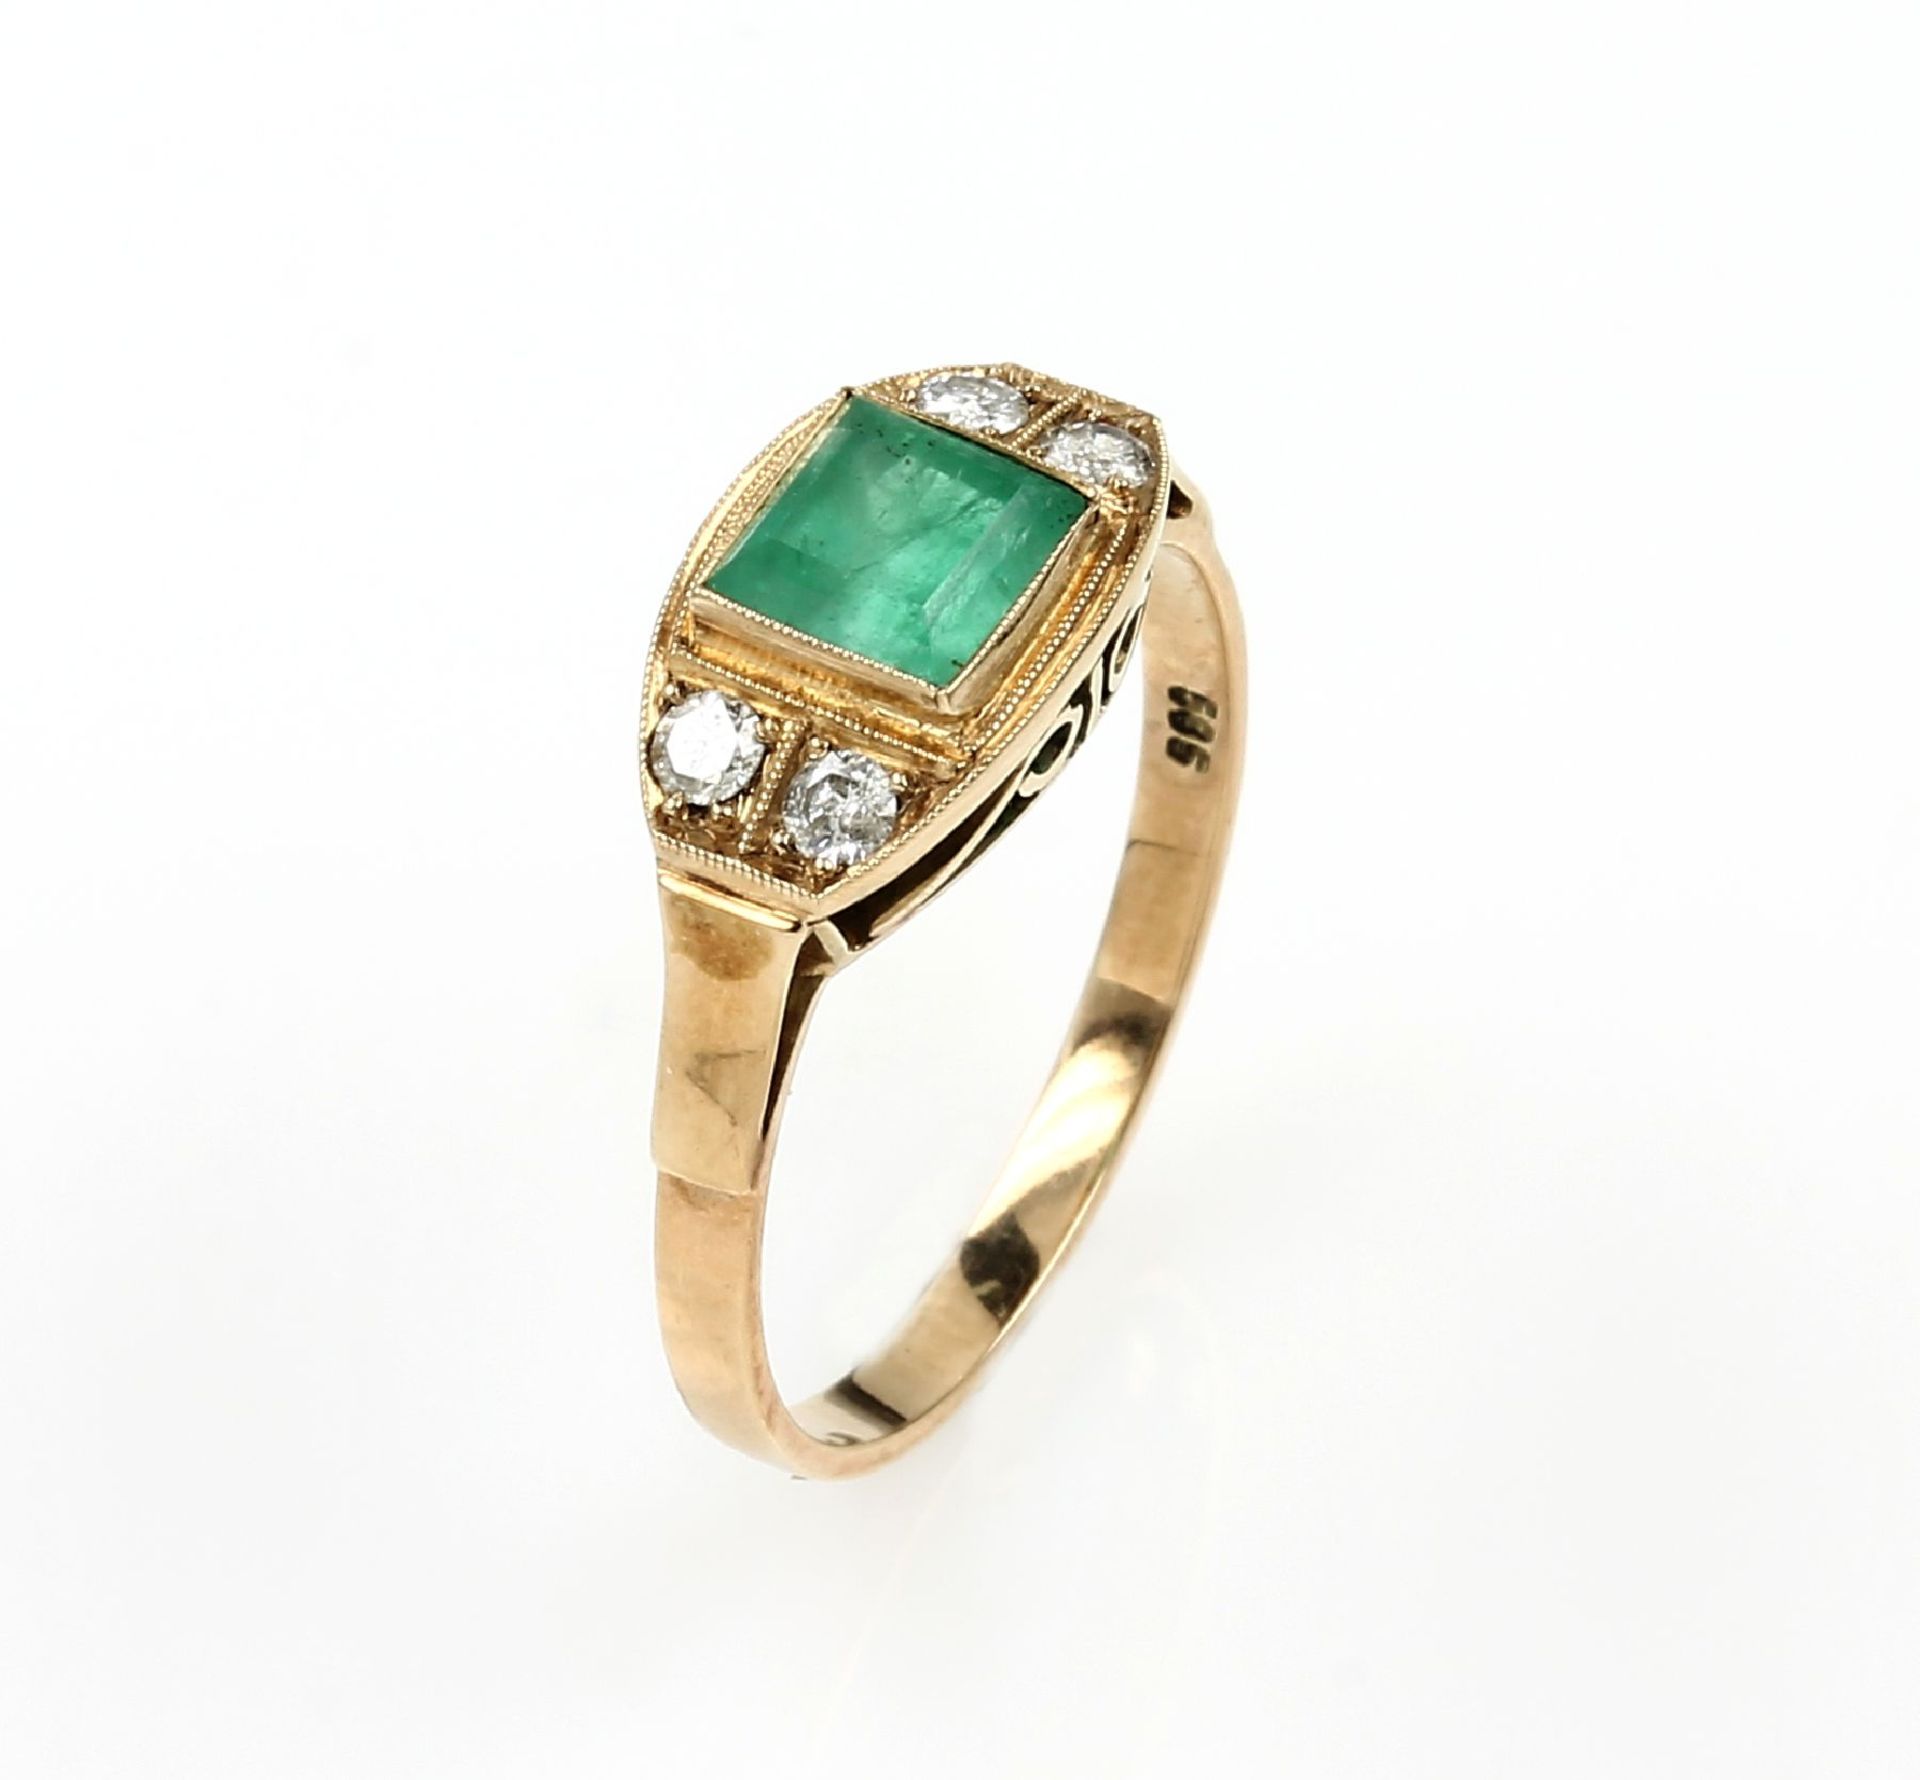 14 kt Gold Ring mit Smaragd und Brillanten, GG 585/000, mittig facett. Smaragdcarree ca. 0.60 ct,